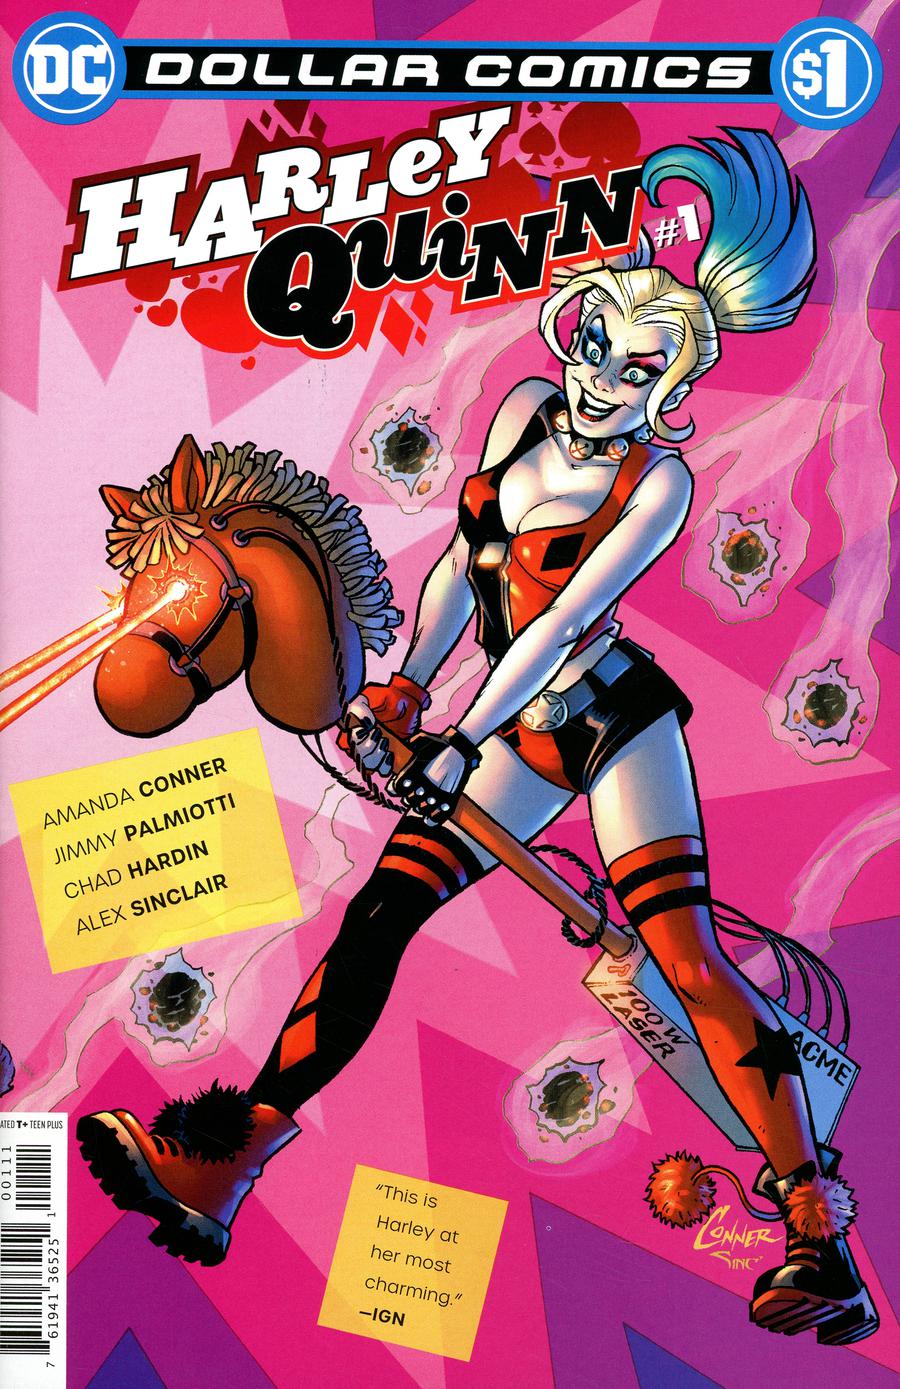 Dollar Comics Harley Quinn Vol 2 #1